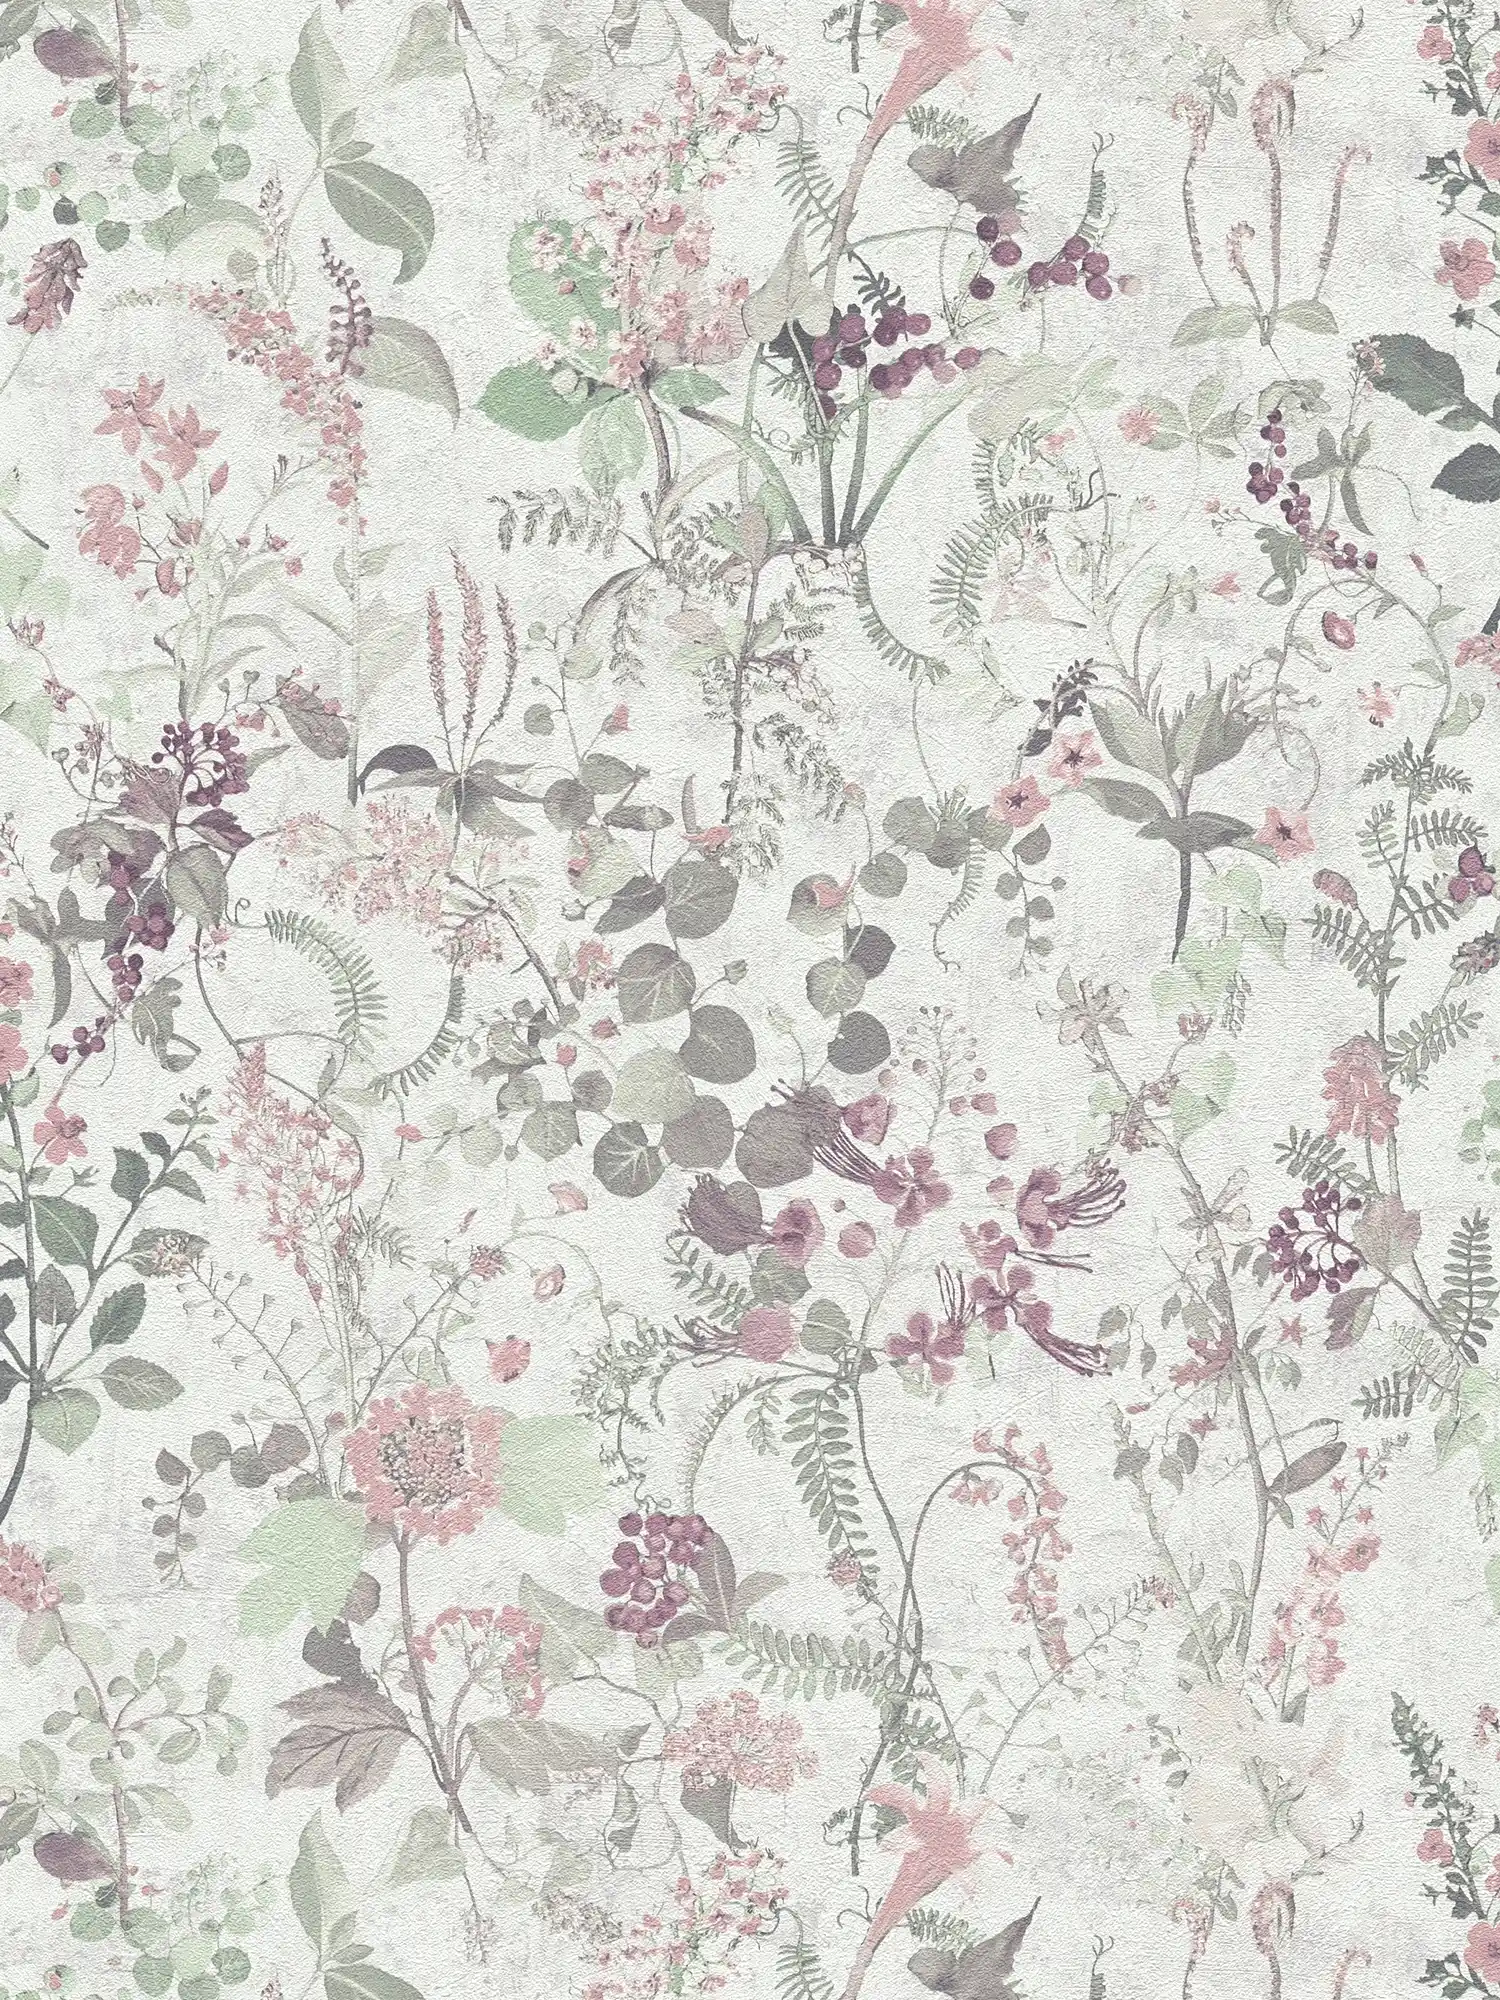         Natur Tapete mit floral Muster – Grau, Grün, Rosa
    